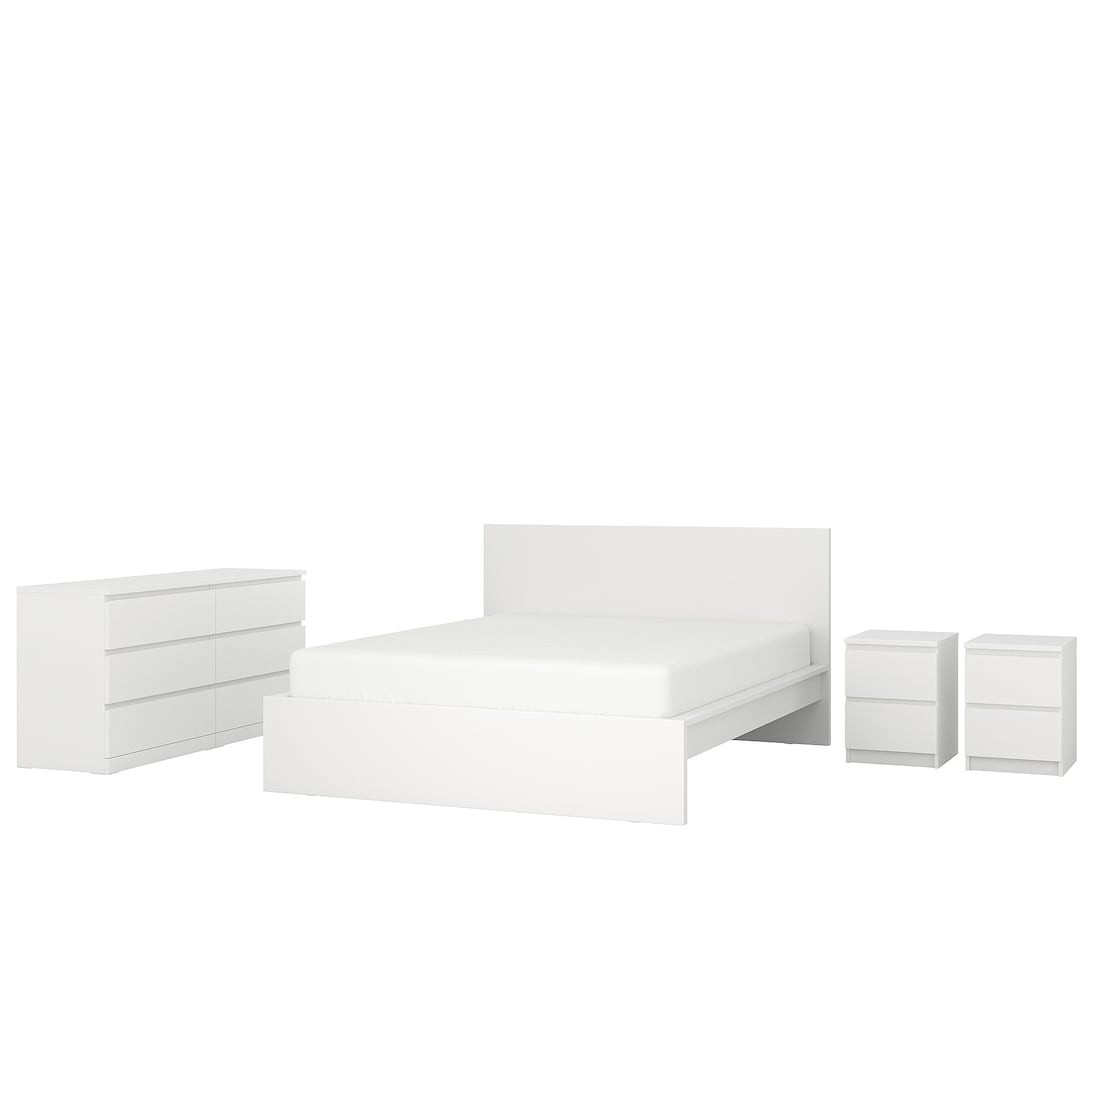 MALM МАЛЬМ Набор мебели для спальни 4 шт, белый, 160x200 см